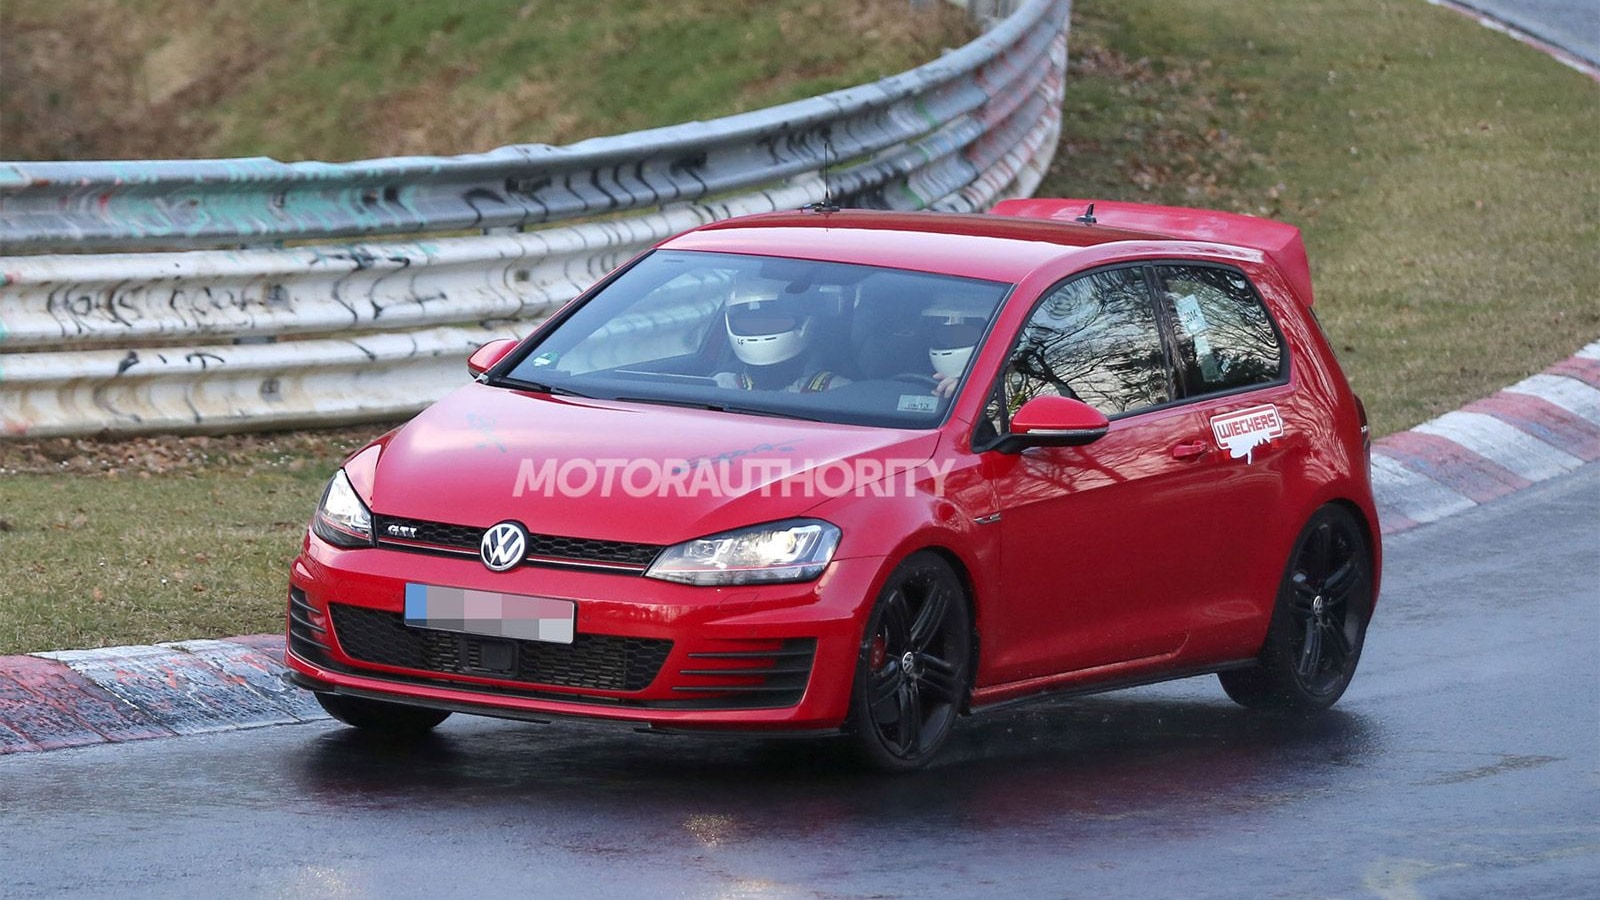 2015 Volkswagen Golf GTI 'Club Sport' spy shots